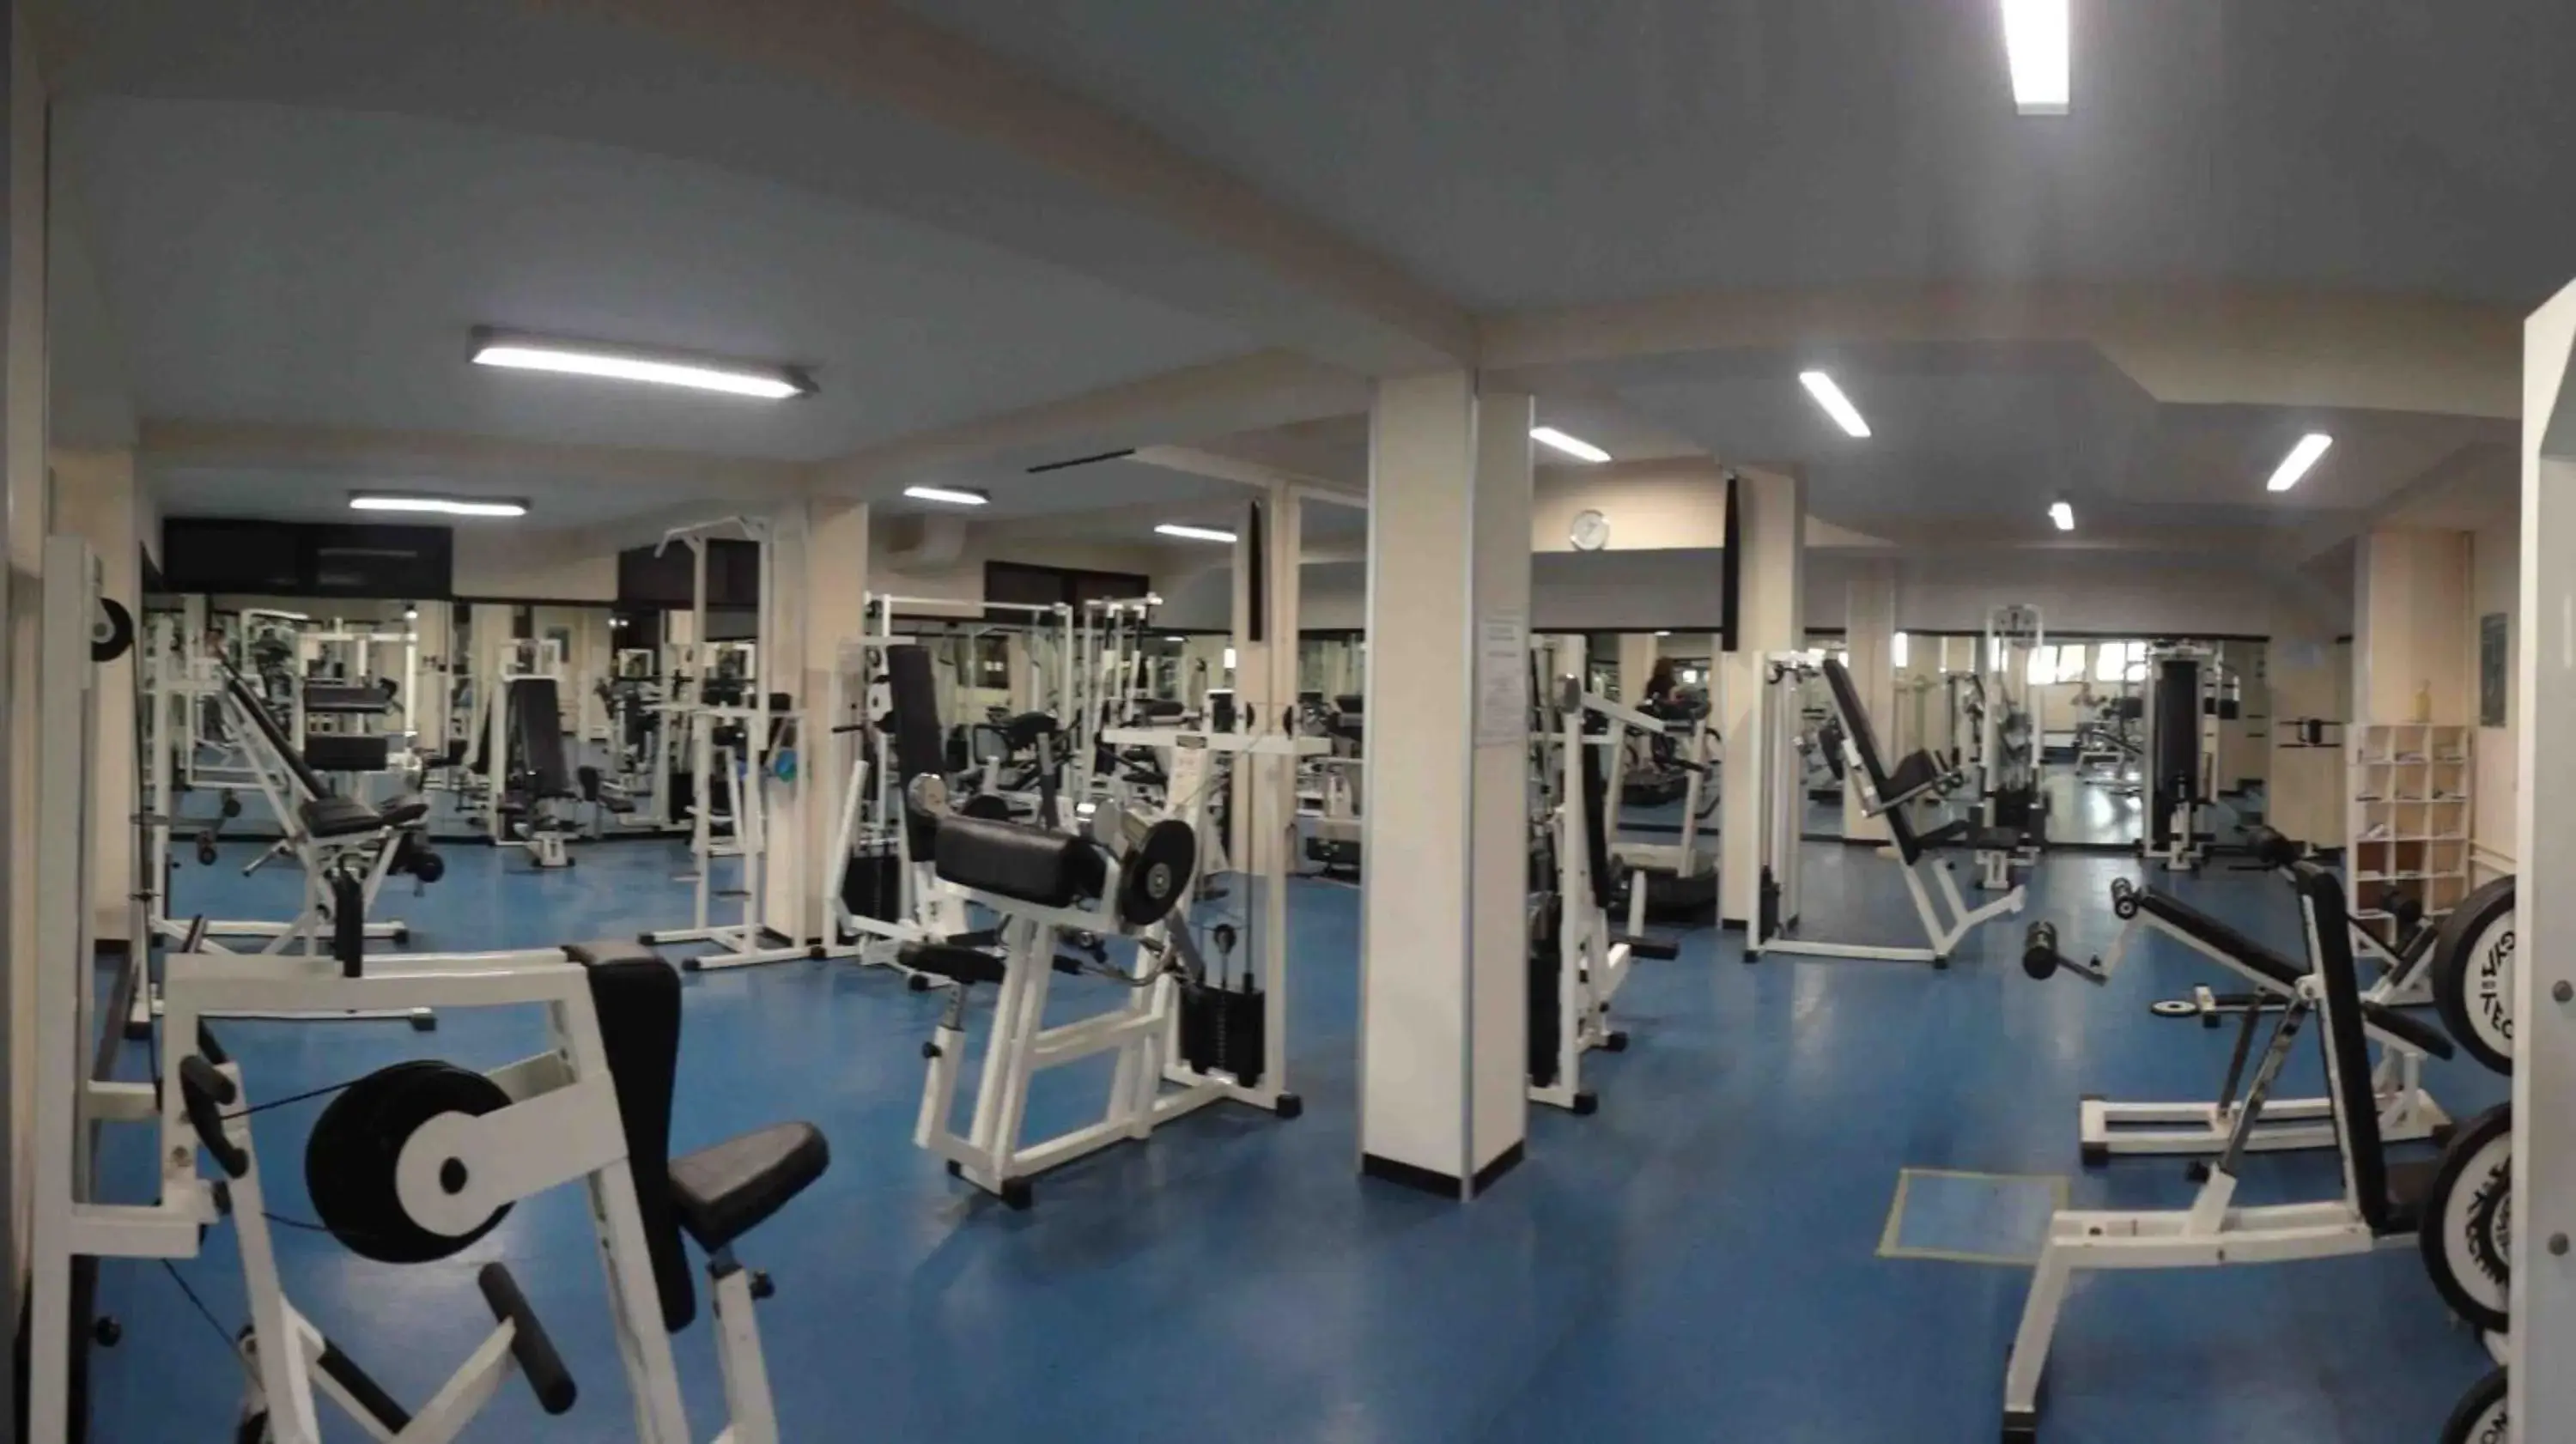 Fitness centre/facilities, Fitness Center/Facilities in Puntaquattroventi